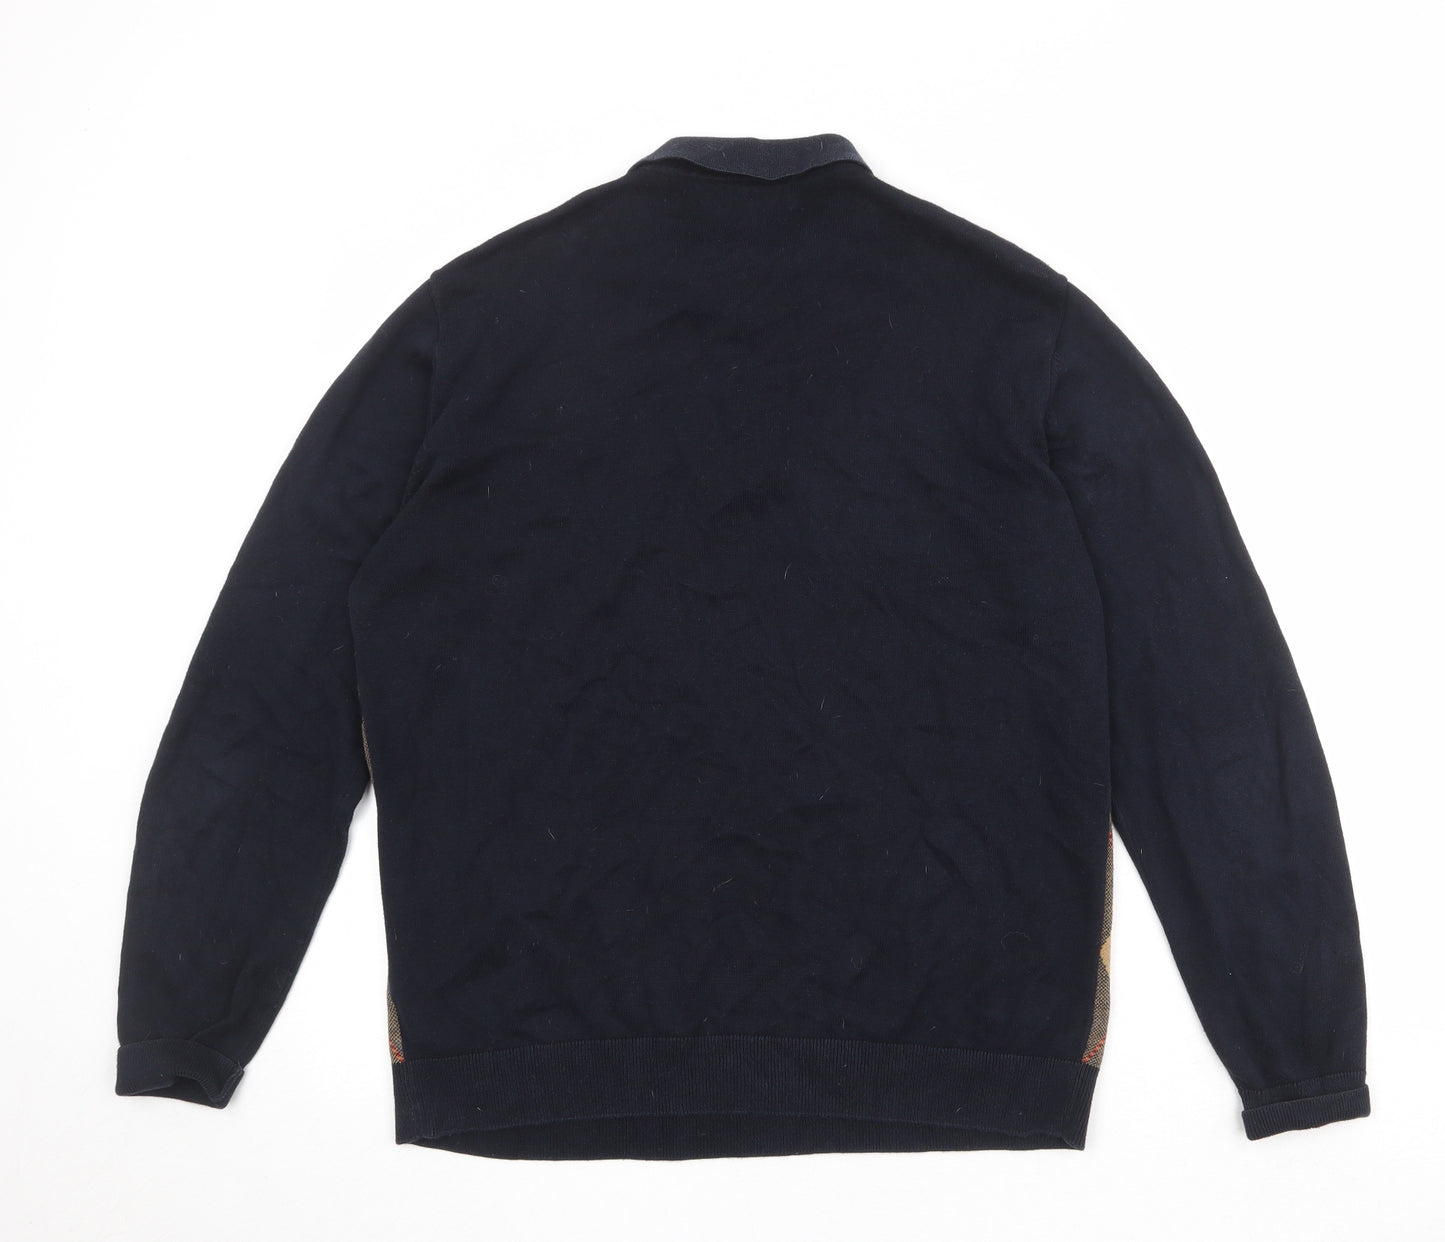 NEXT Mens Multicoloured Collared Argyle/Diamond Cotton Pullover Jumper Size L Long Sleeve